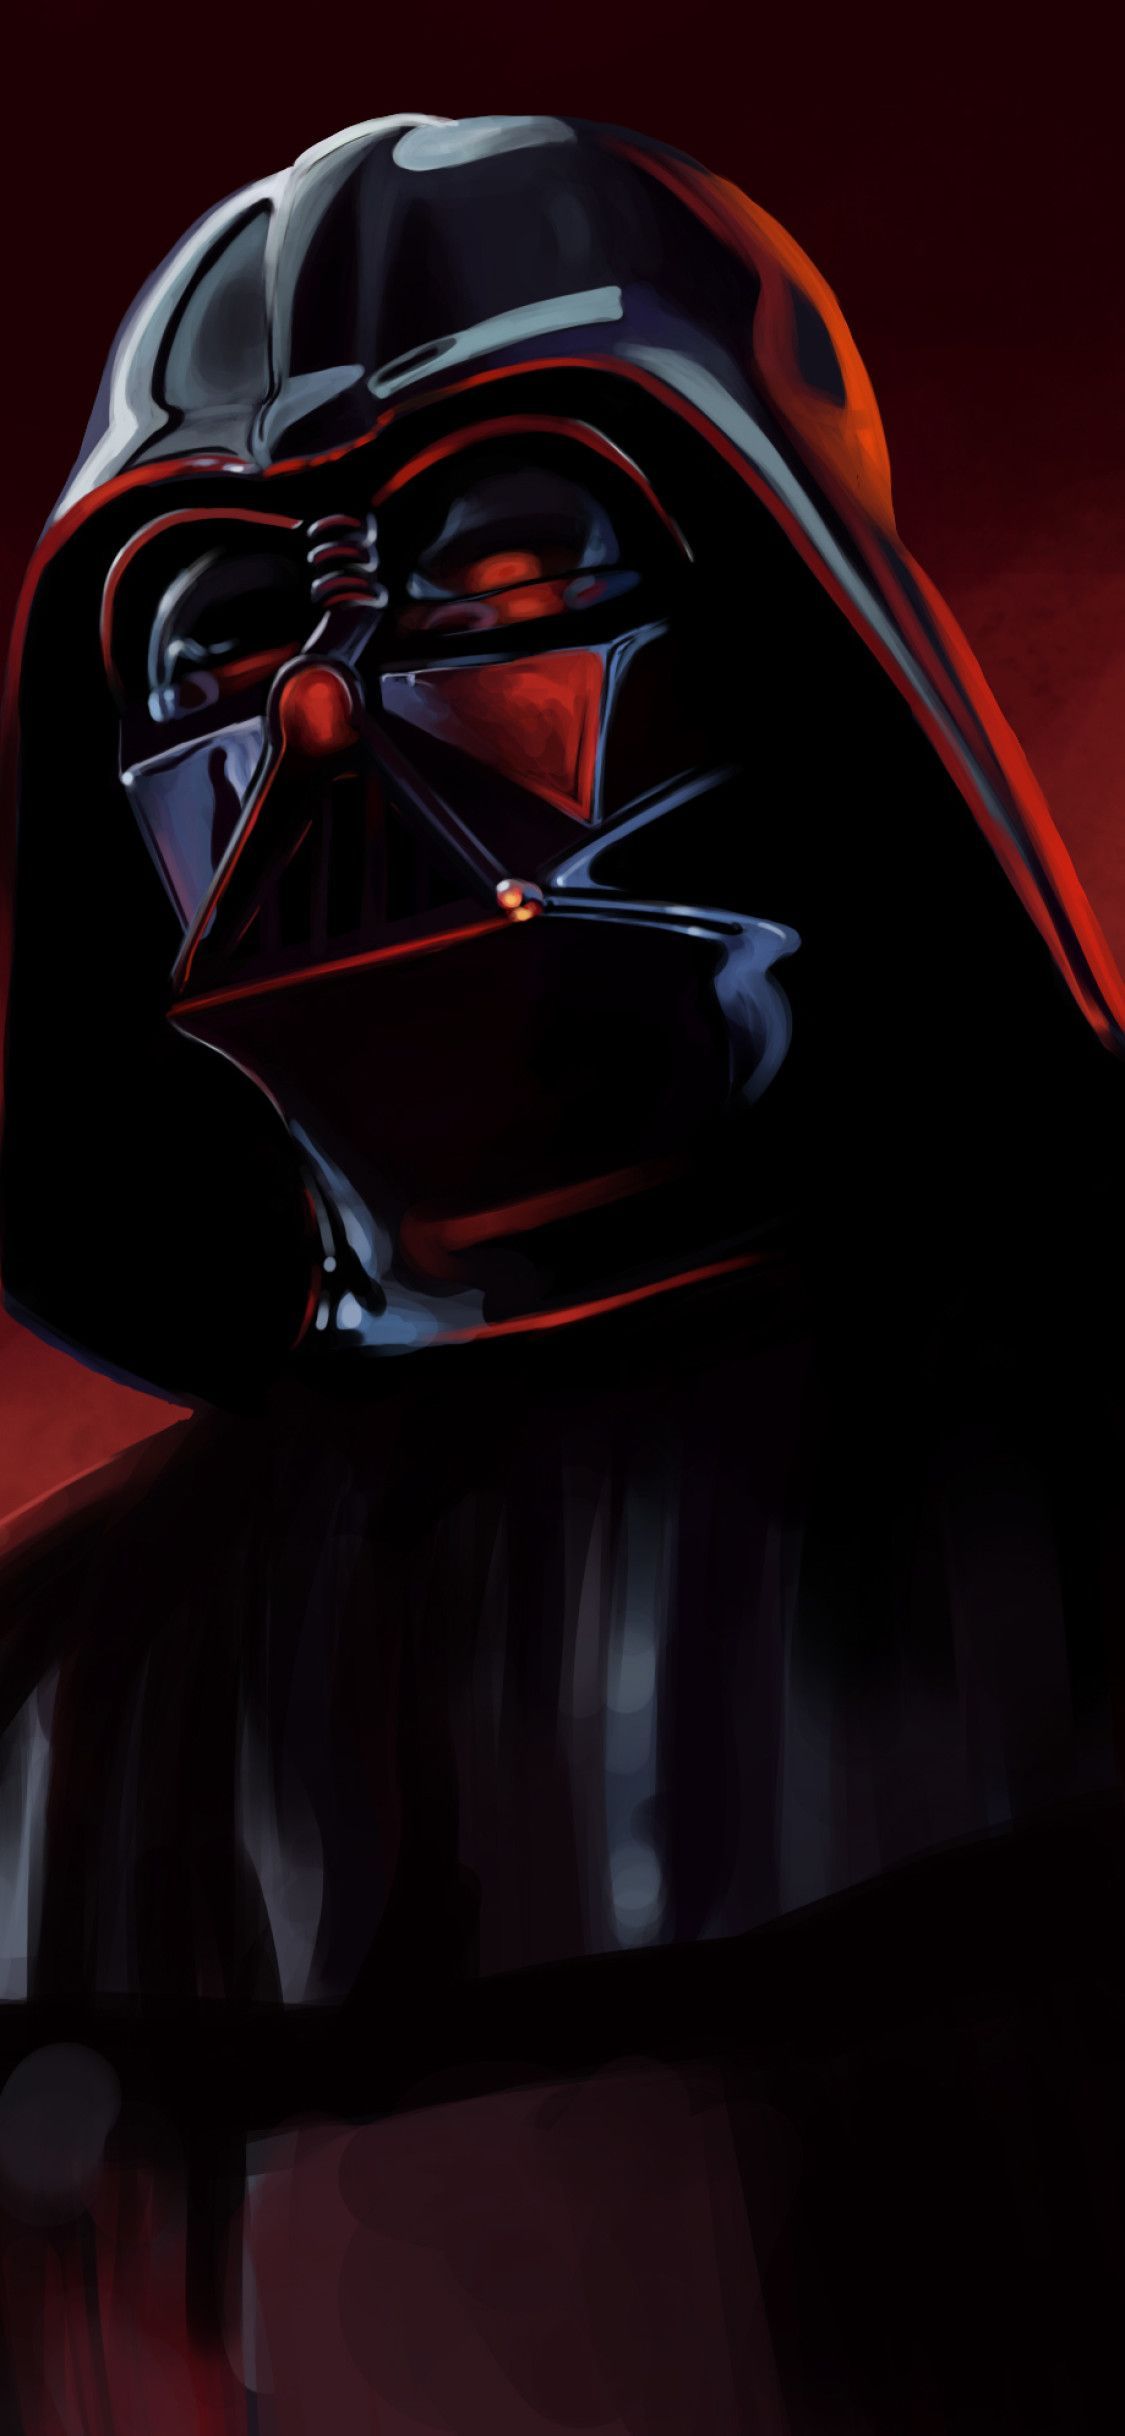 Darth Vader iPhone X Wallpaper Free Darth Vader iPhone X Background